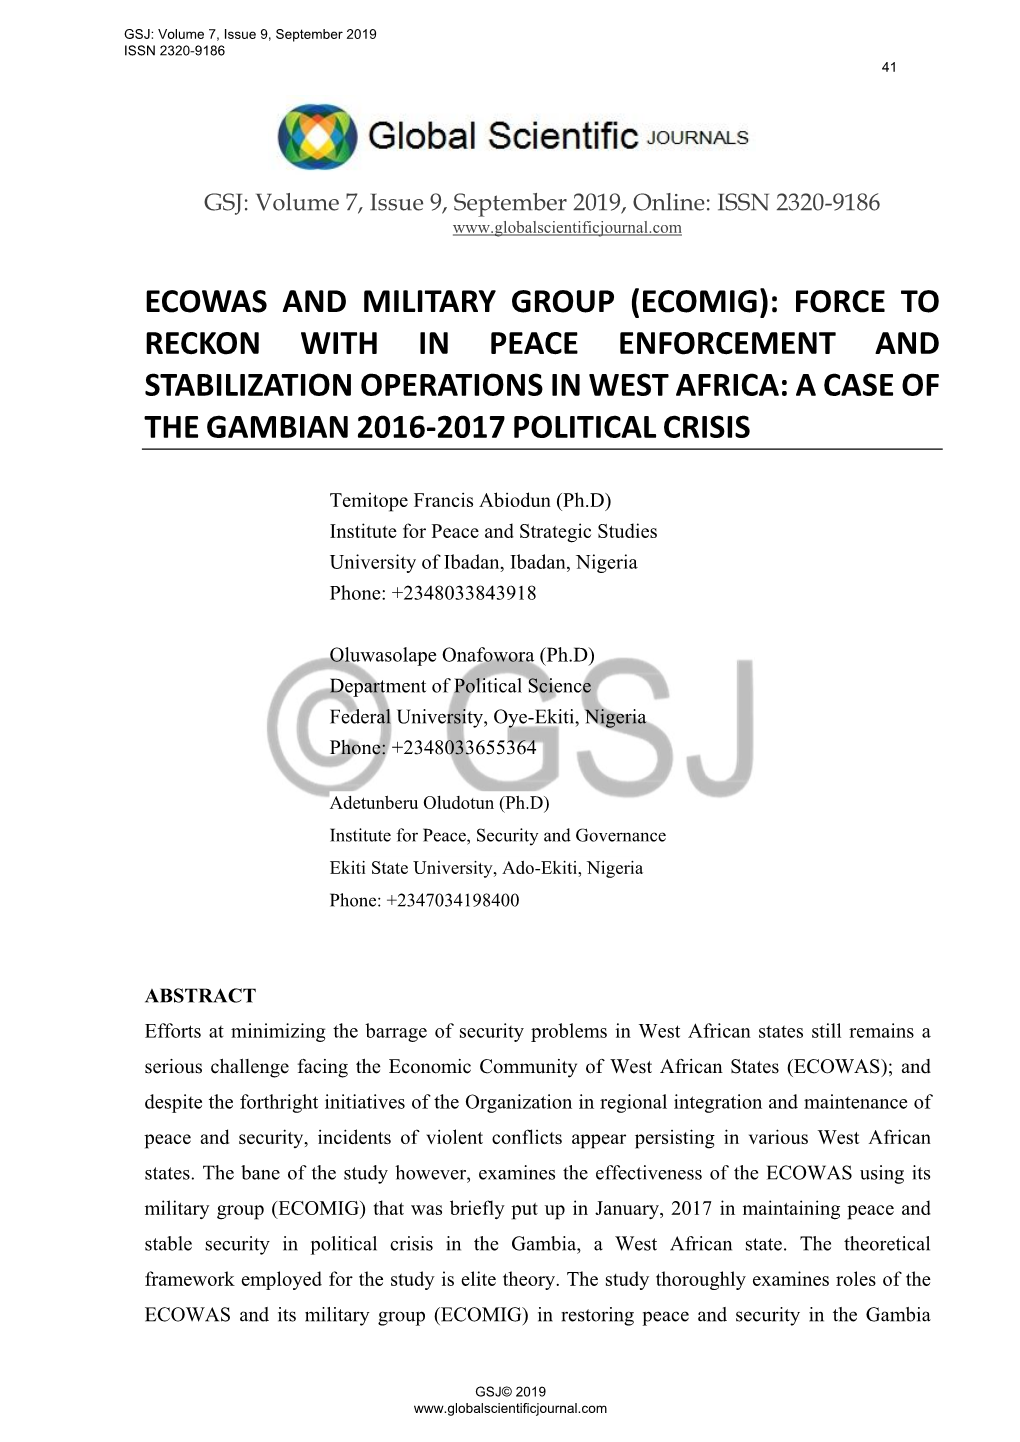 Ecowas and Military Group (Ecomig): Force to Reckon